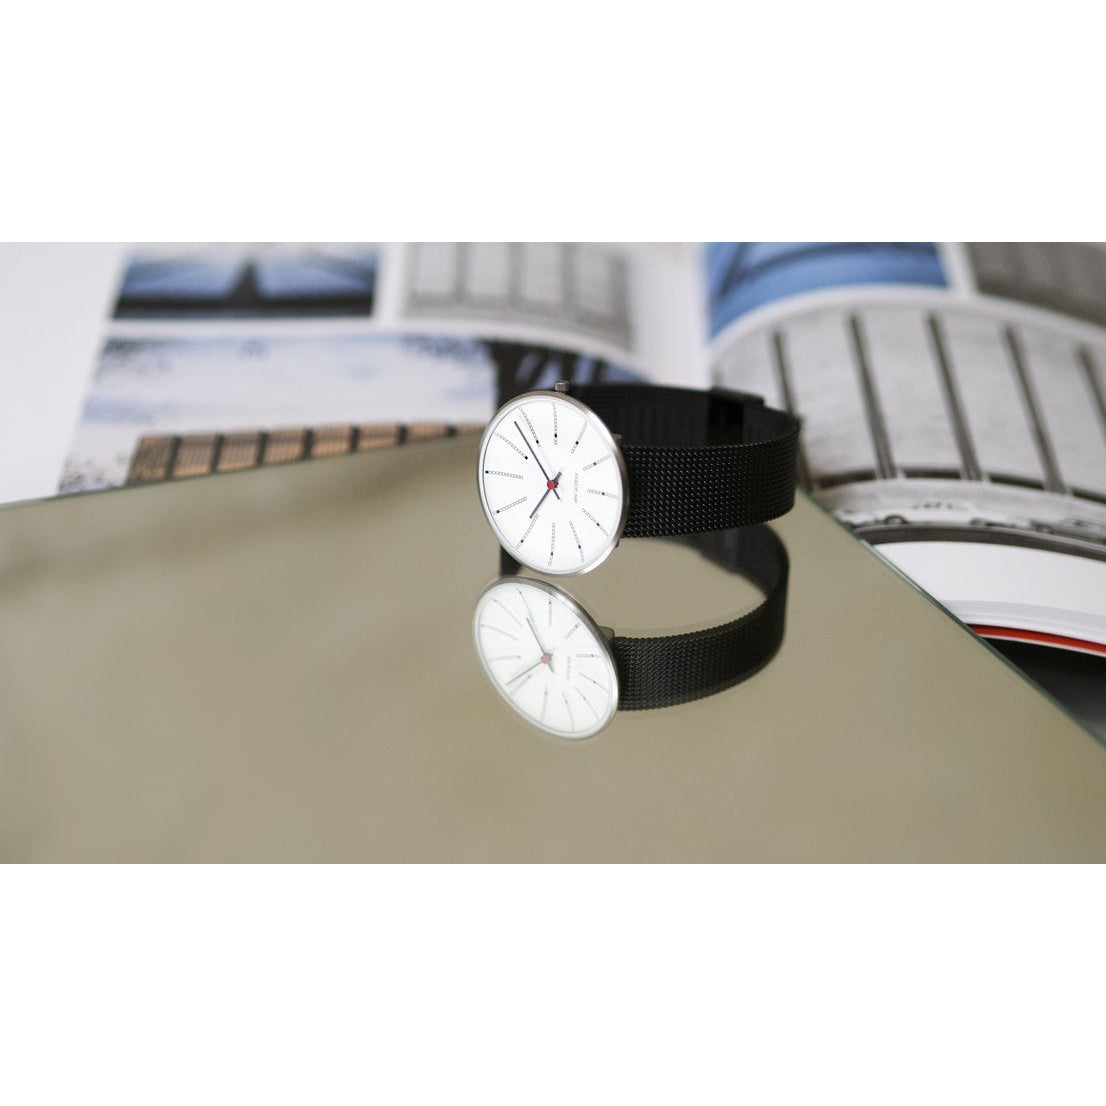 Arne Jacobsen Roman Wristwatch Red, ø34